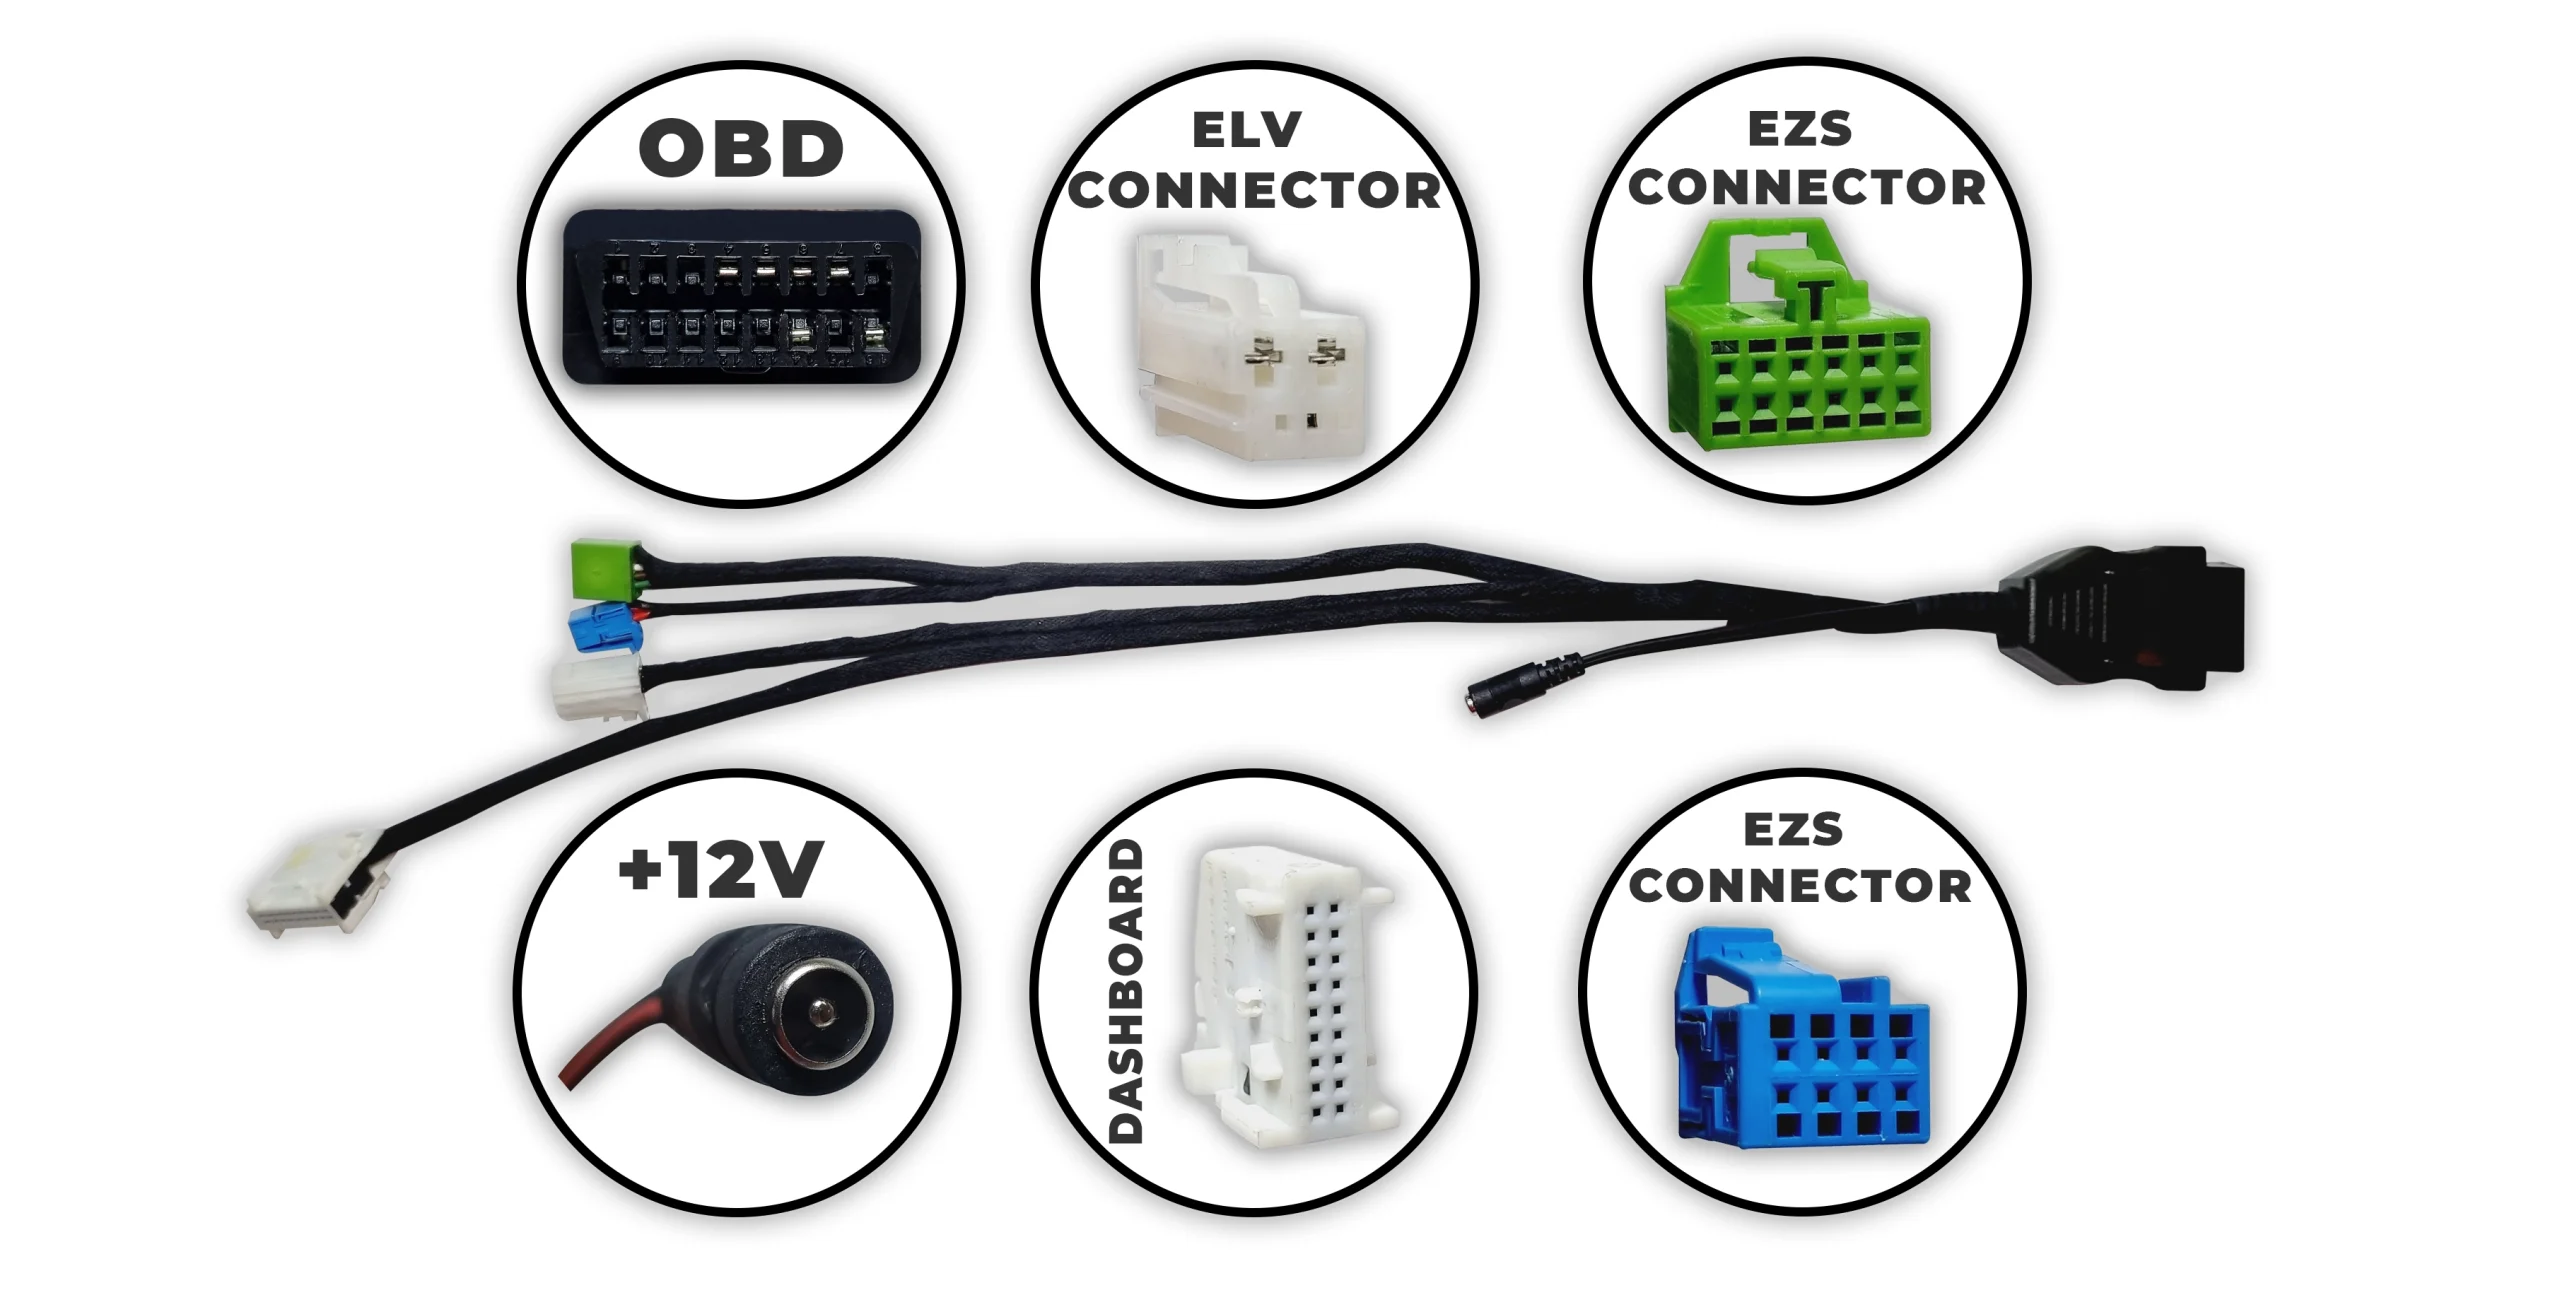 W166 W246 W447 EIS ELV Cluster test platform cable for Mercedes-Benz works with Abrites, VVDI MB, Autel